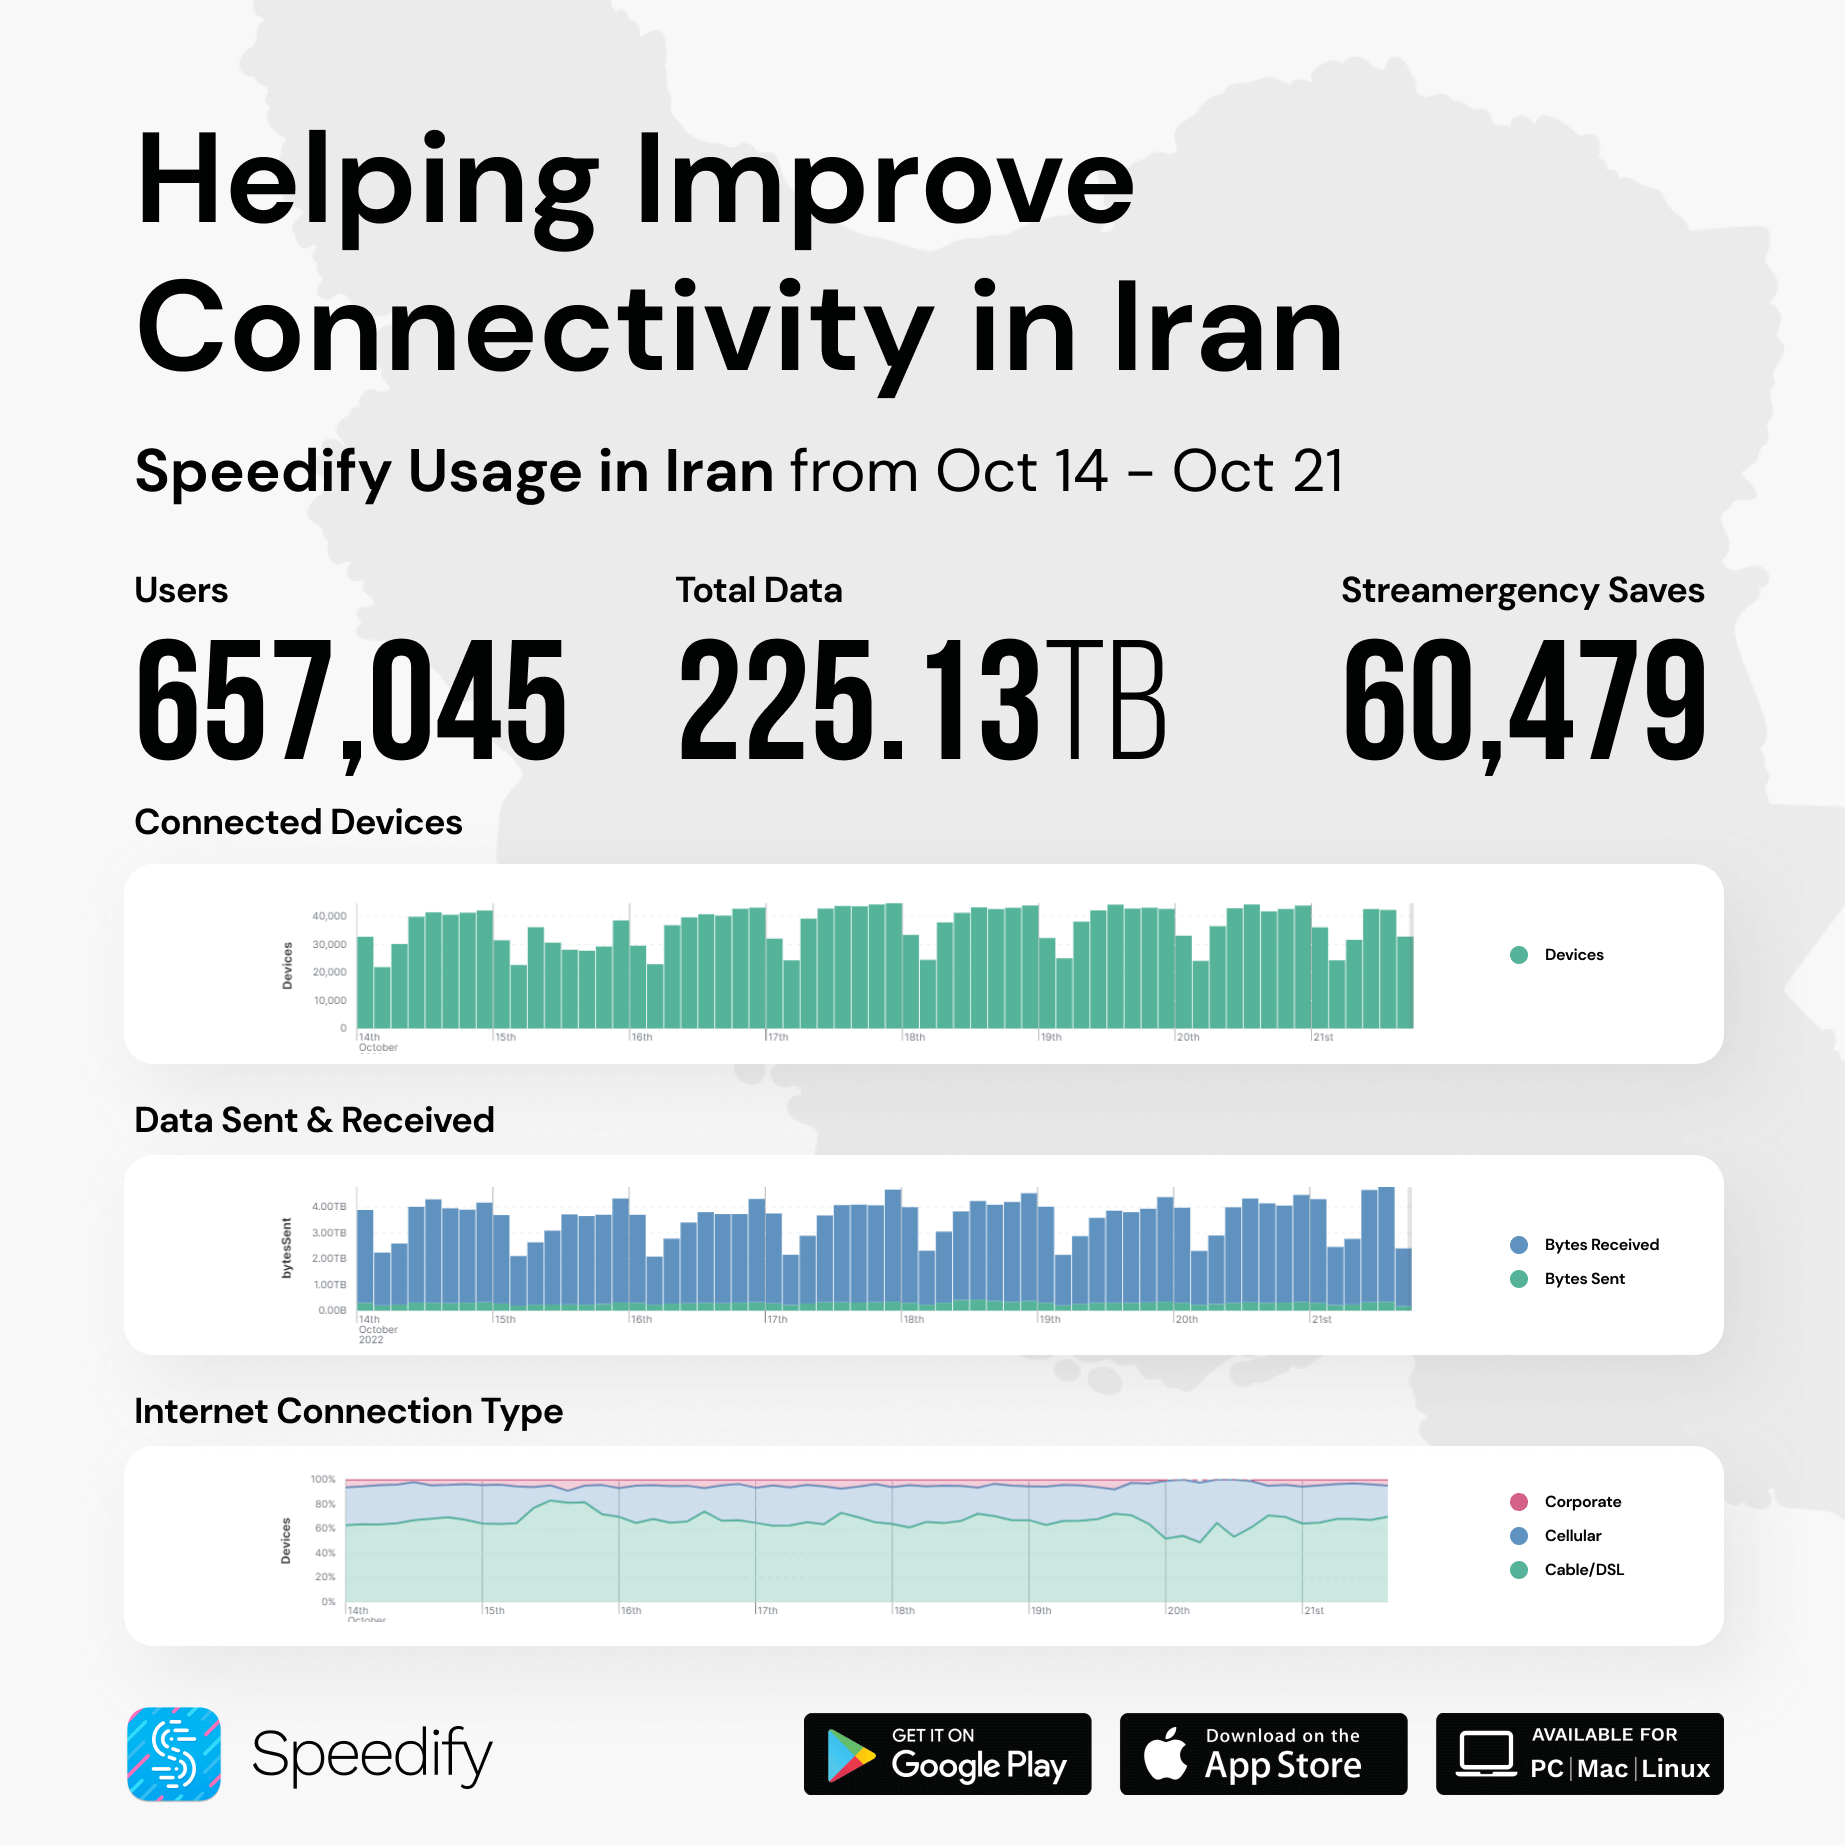 Oct 21 - Iran Internet usage for Speedify users